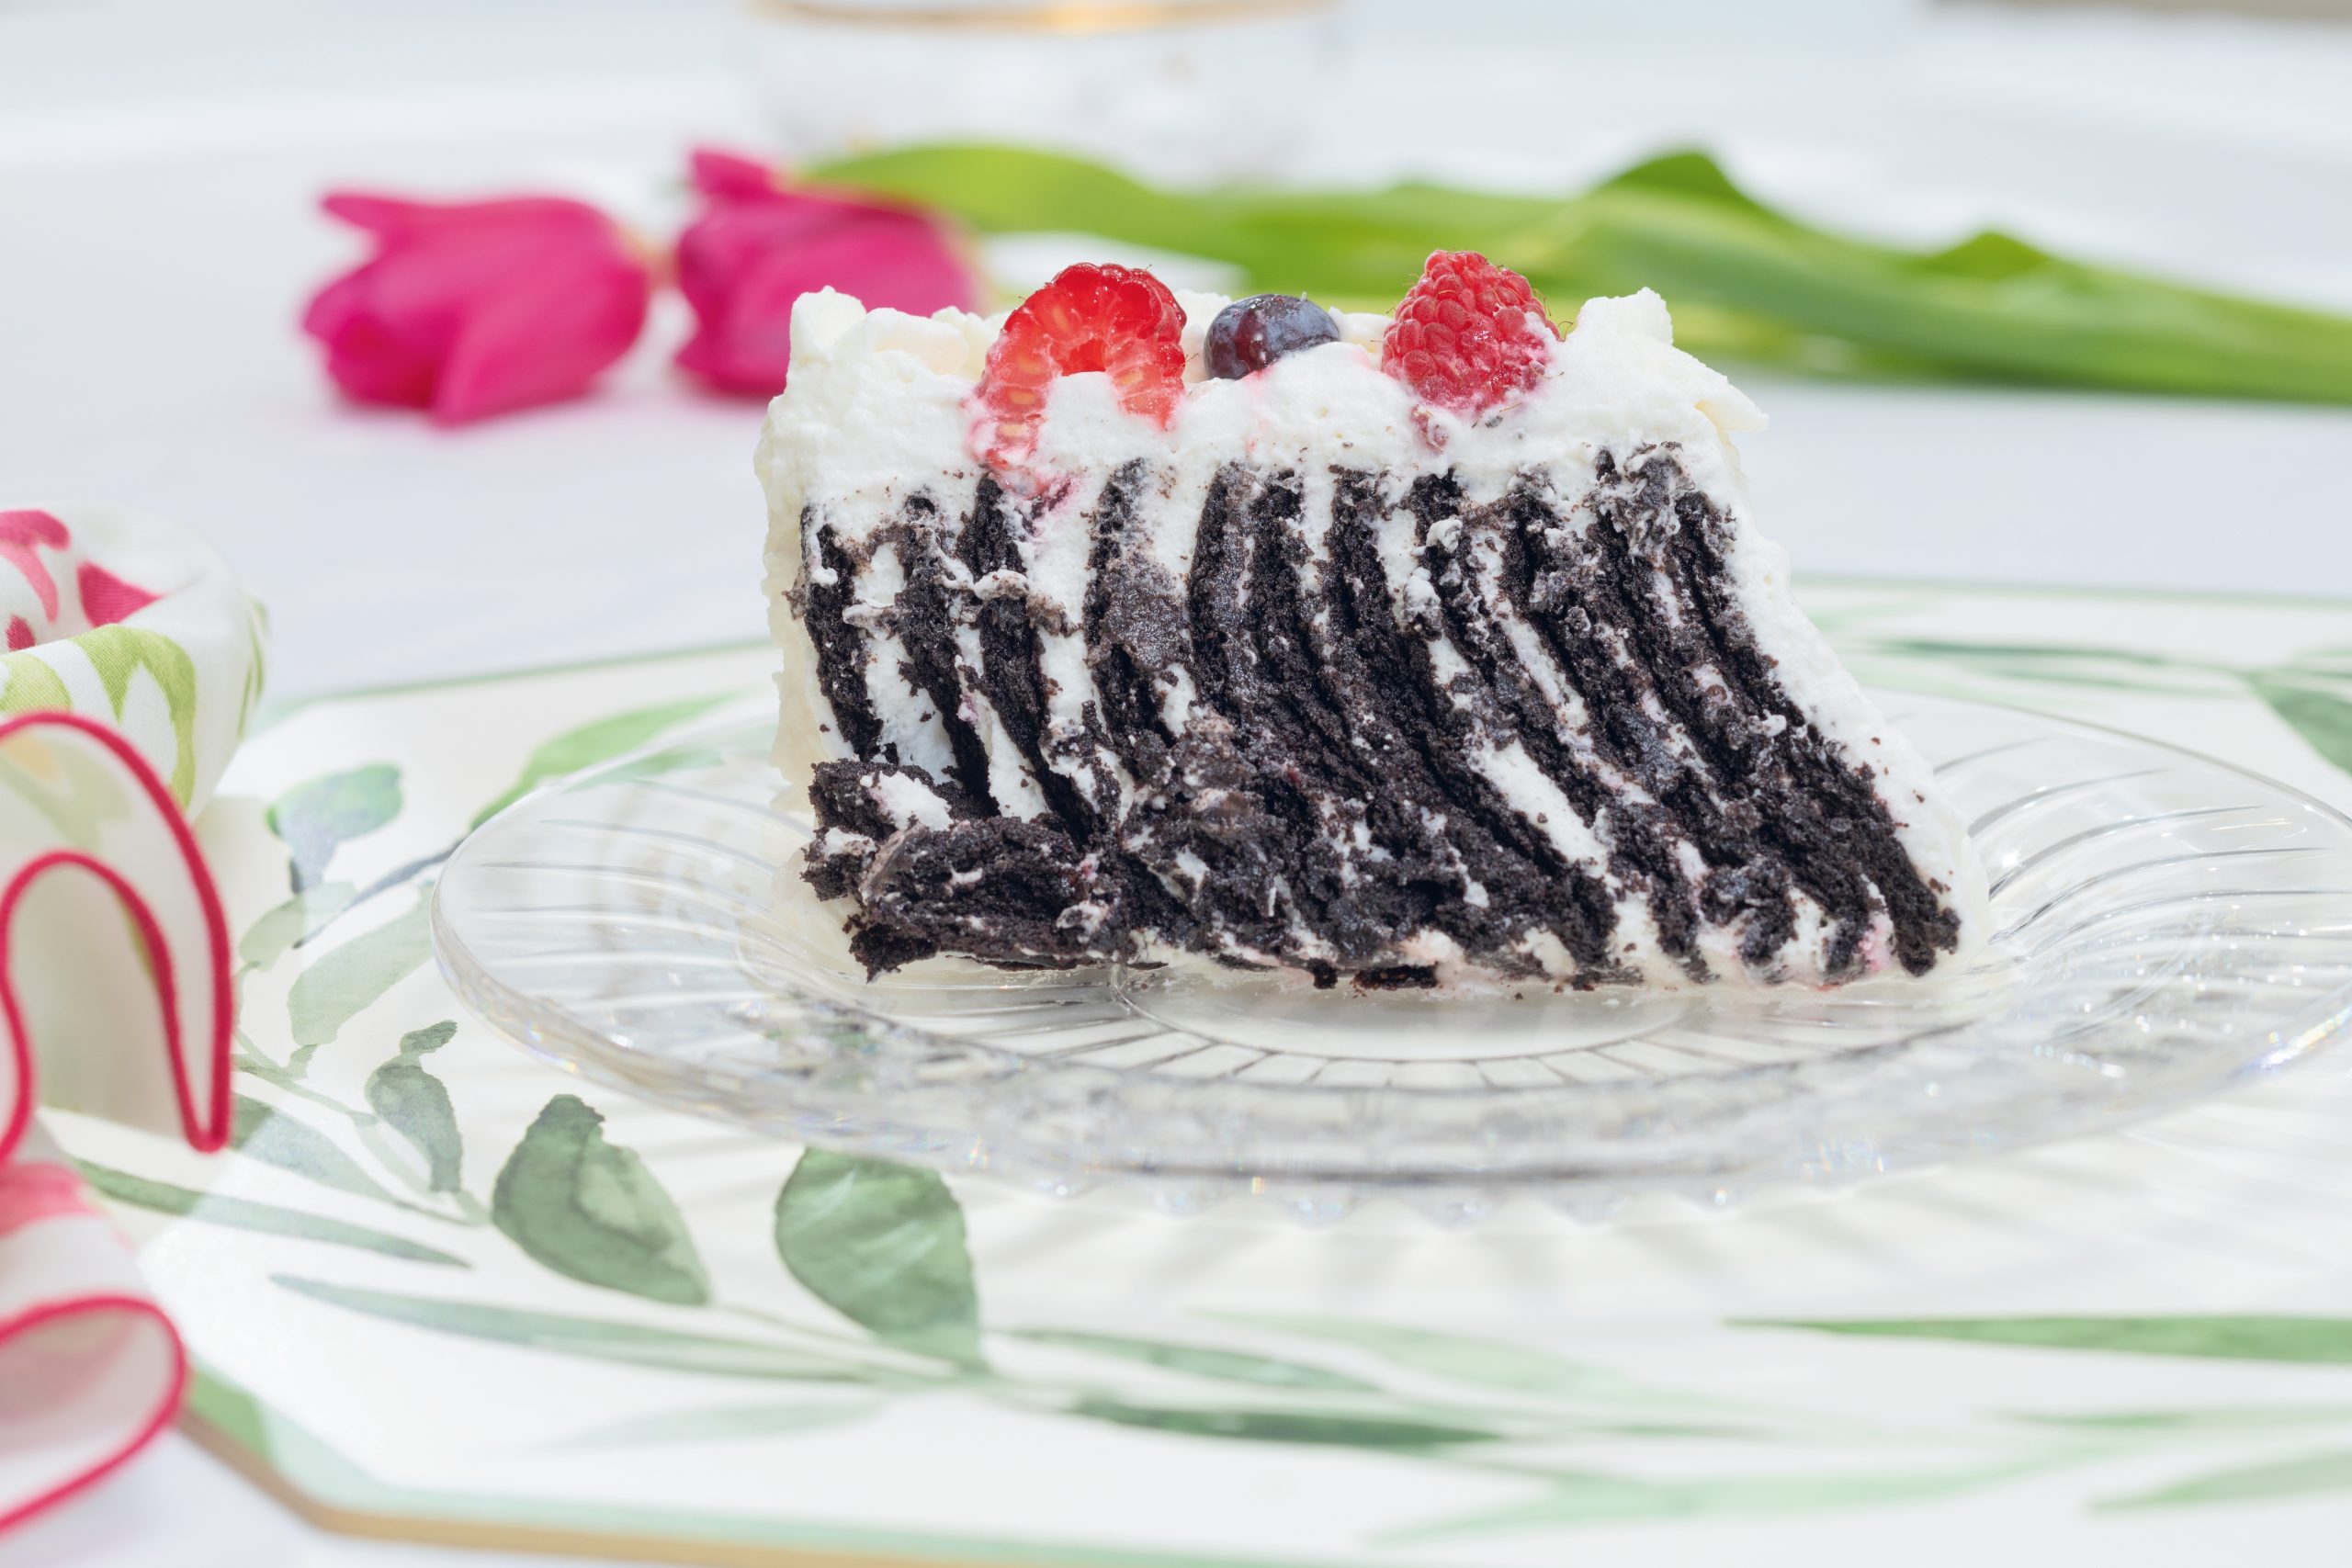 A slice of the Chocolate Raspberry Icebox Cake reveals zebra-like stripes of chocolate and cream. Courtesy of non(e)such: floral Ballard napkins.